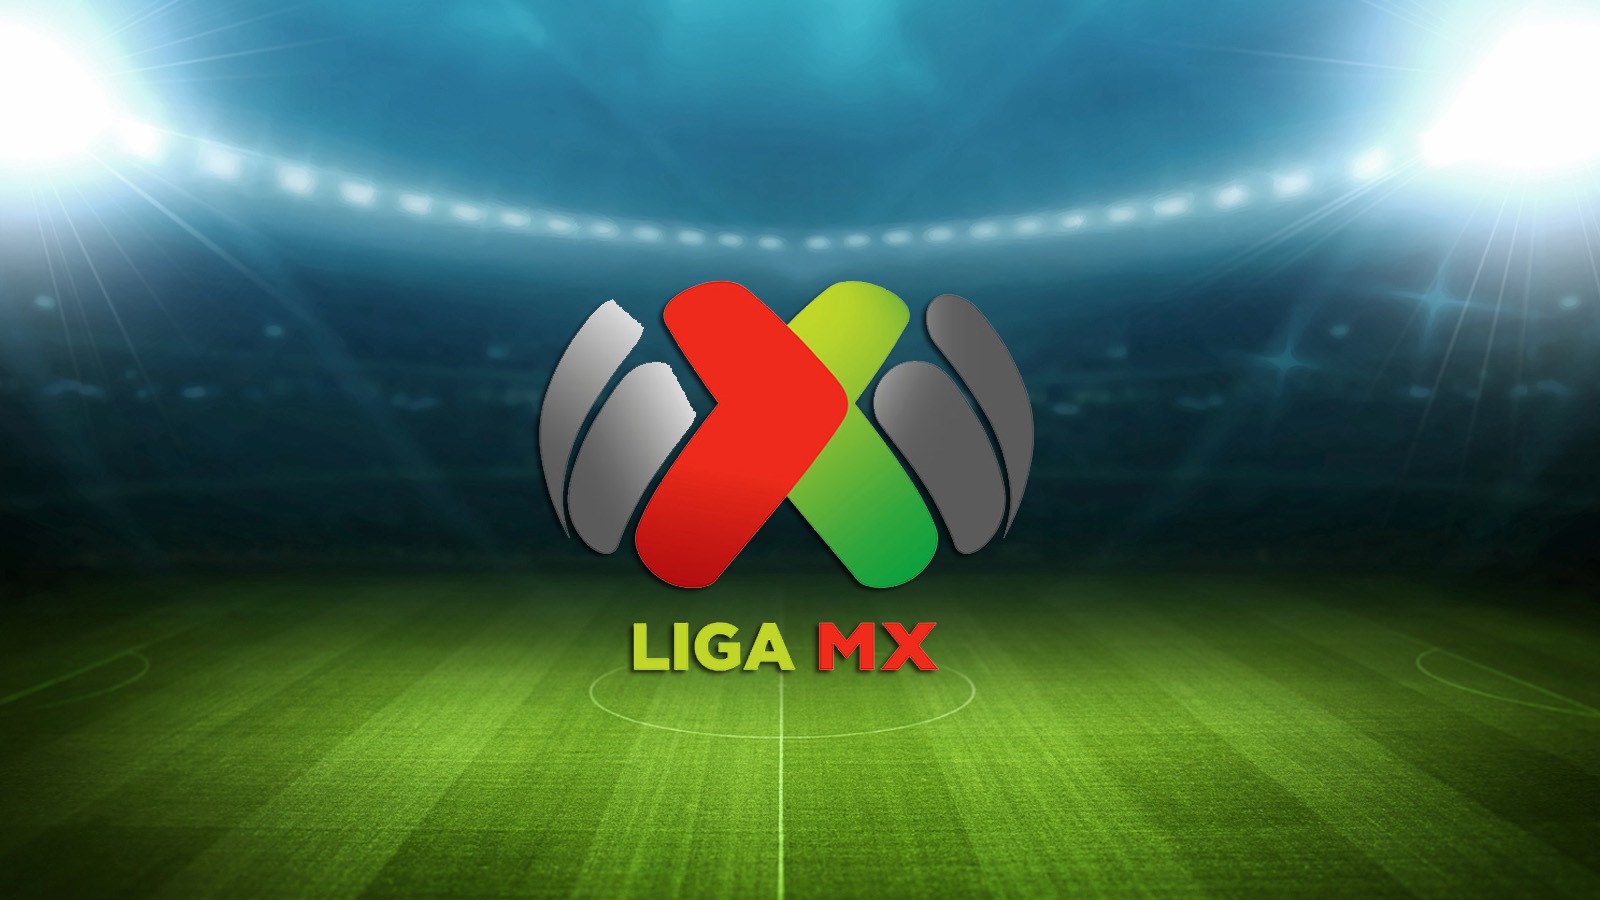 Así marcha la tabla de la Liga MX tras la jornada 12 del Apertura 2021